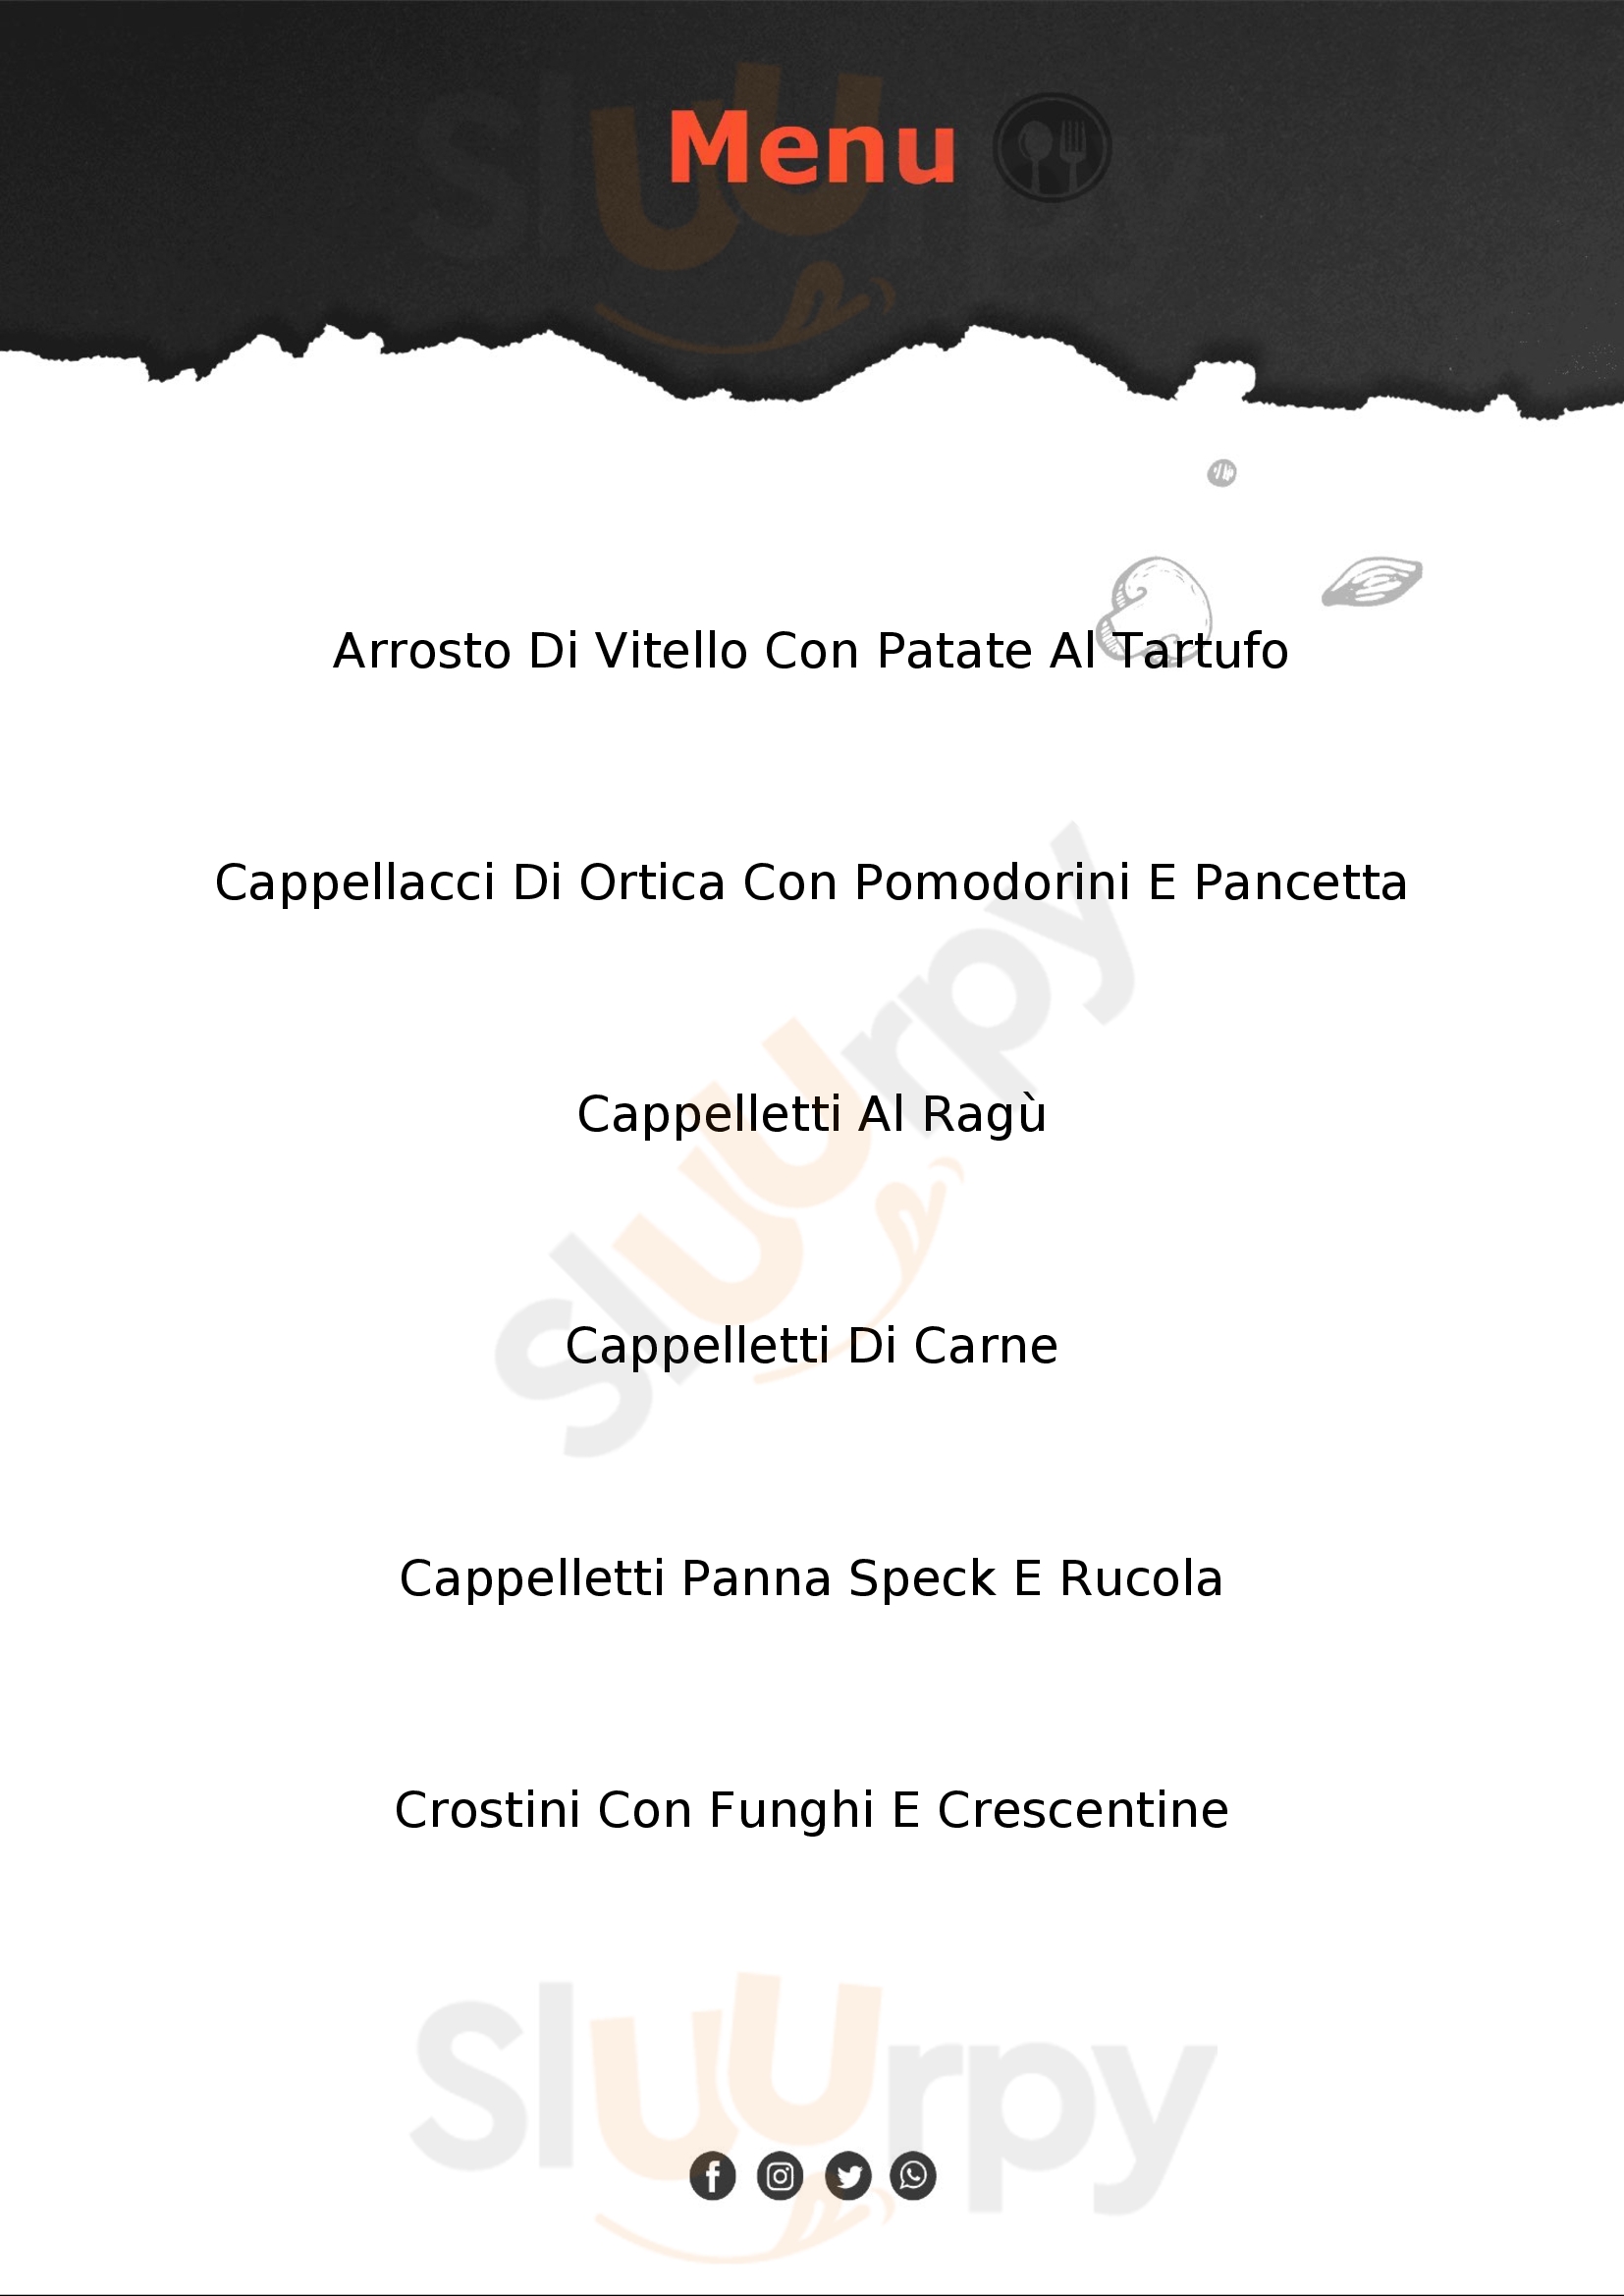 Trattoria Valsenio Di Quarneti Monia Ravenna menù 1 pagina